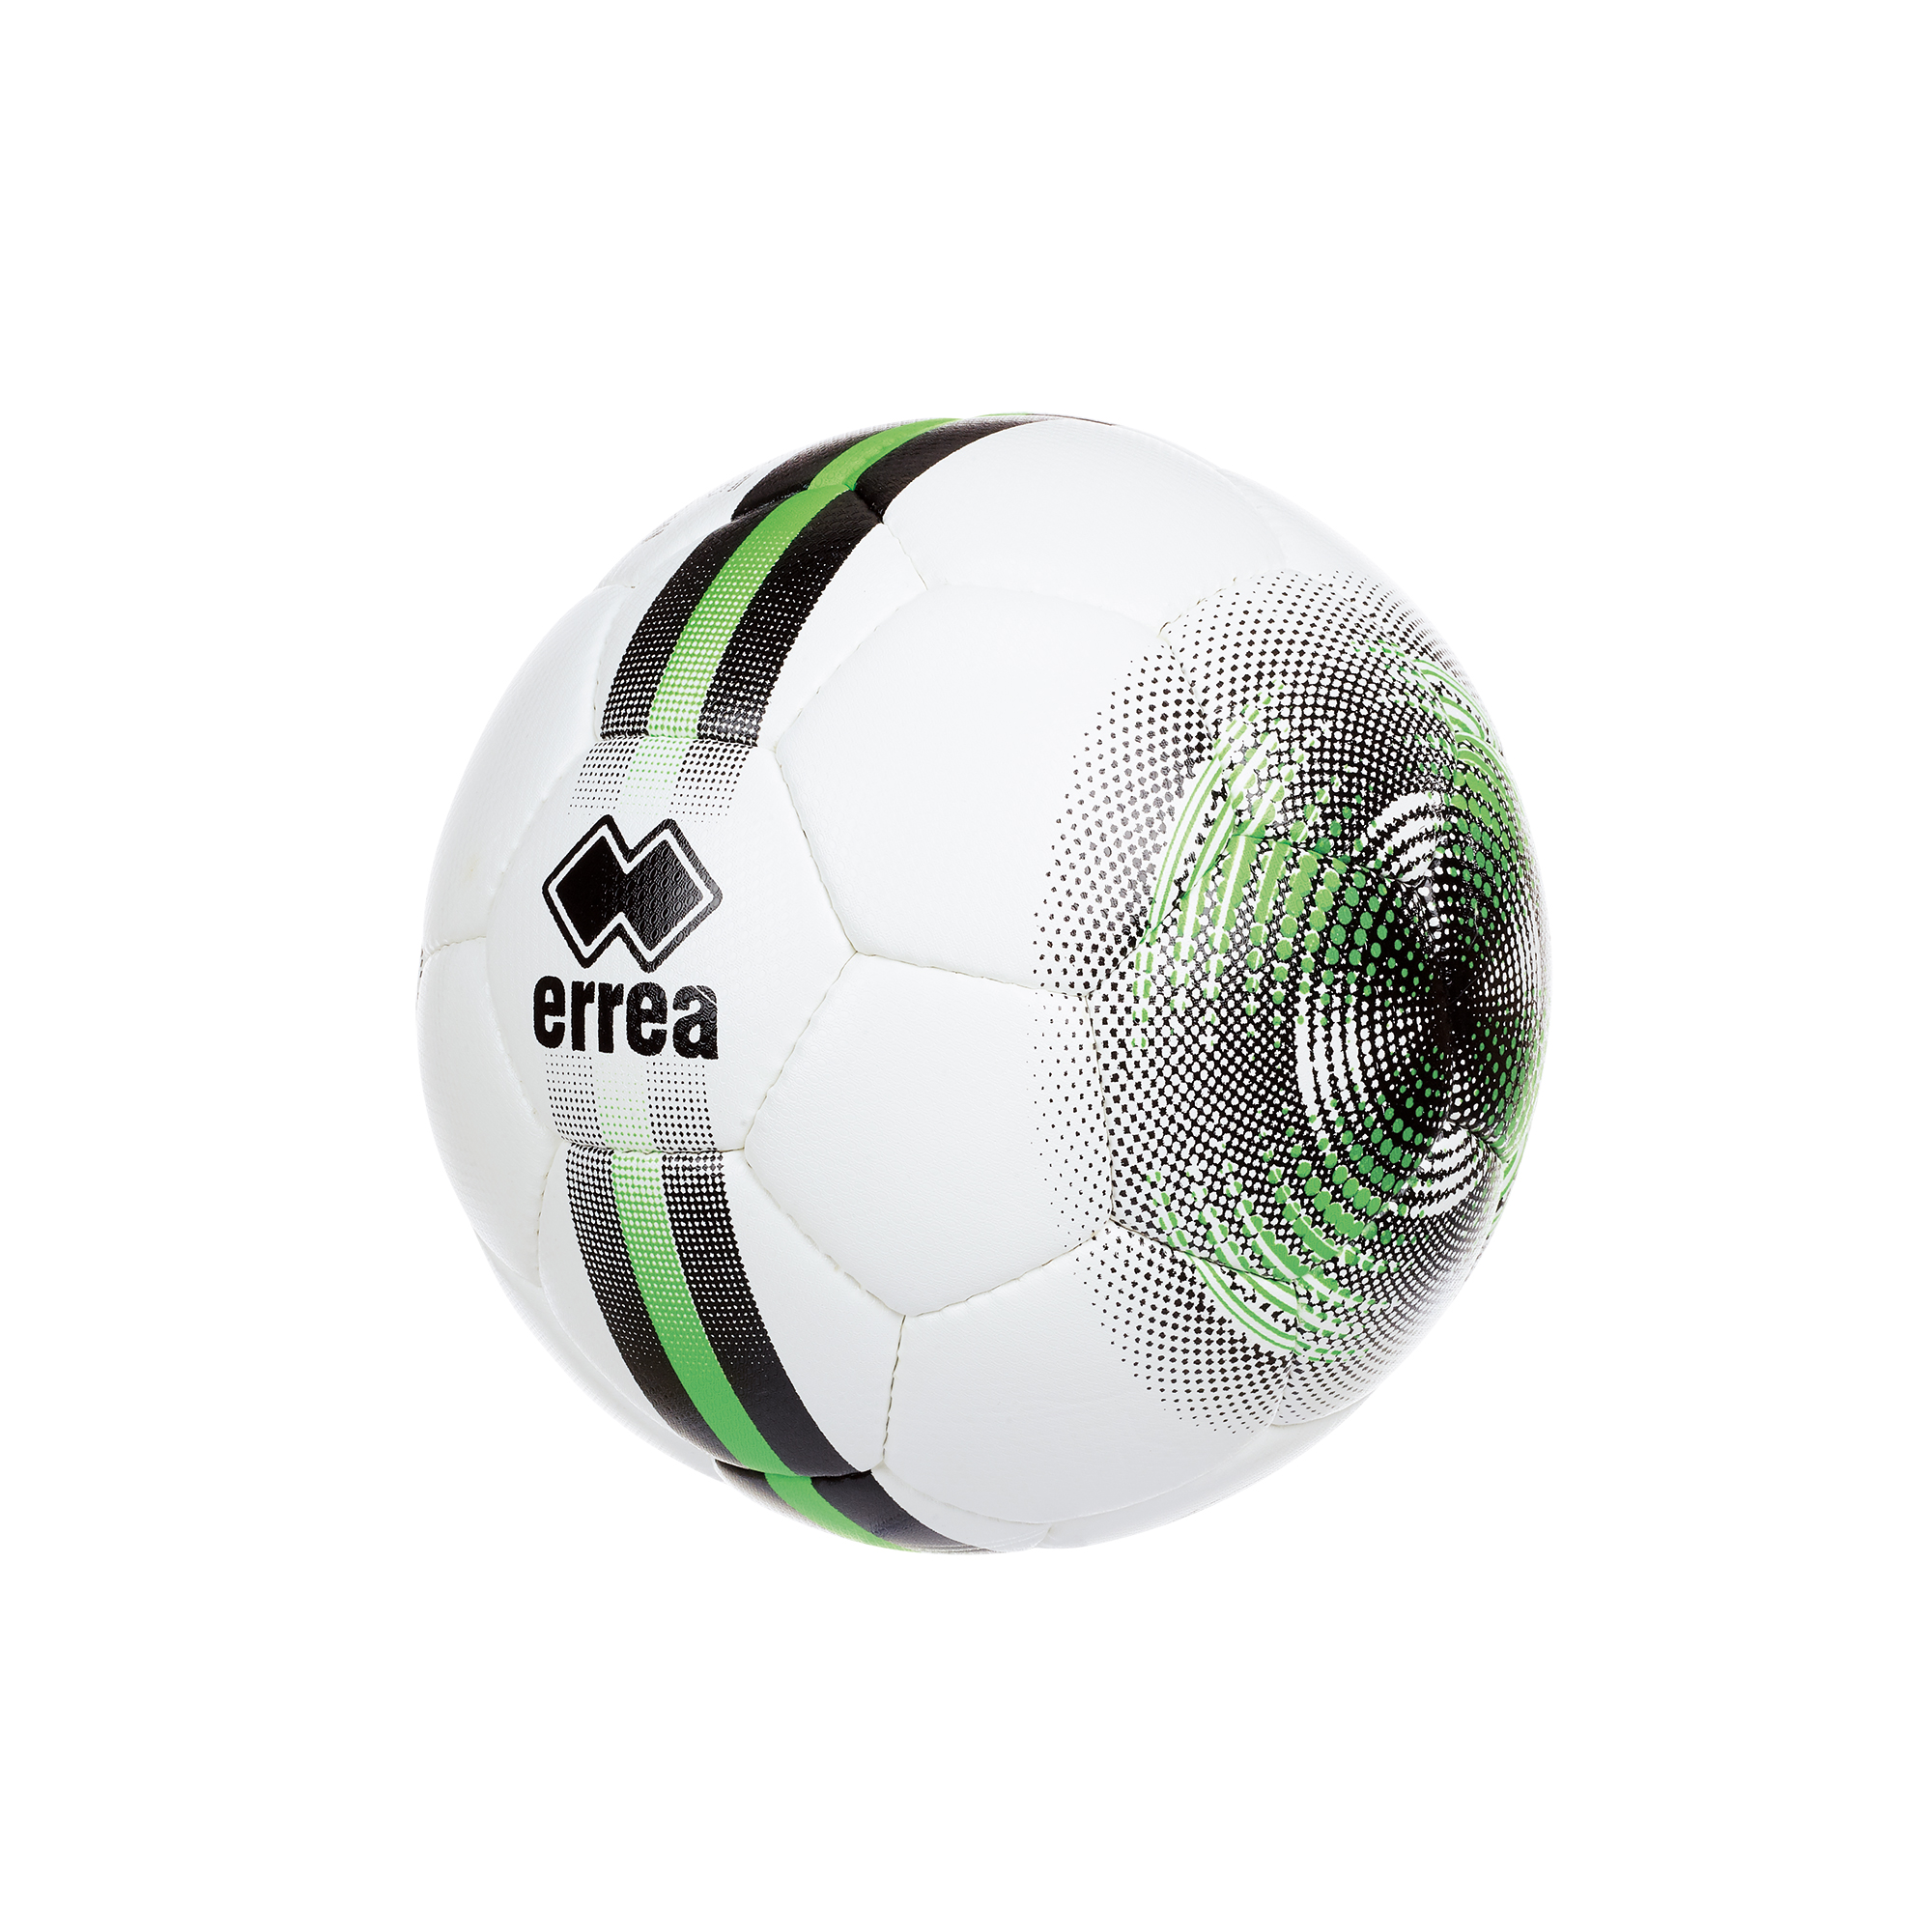 Errea - Mercurio 3.0 Soccer Ball - Columbus Eagles FC